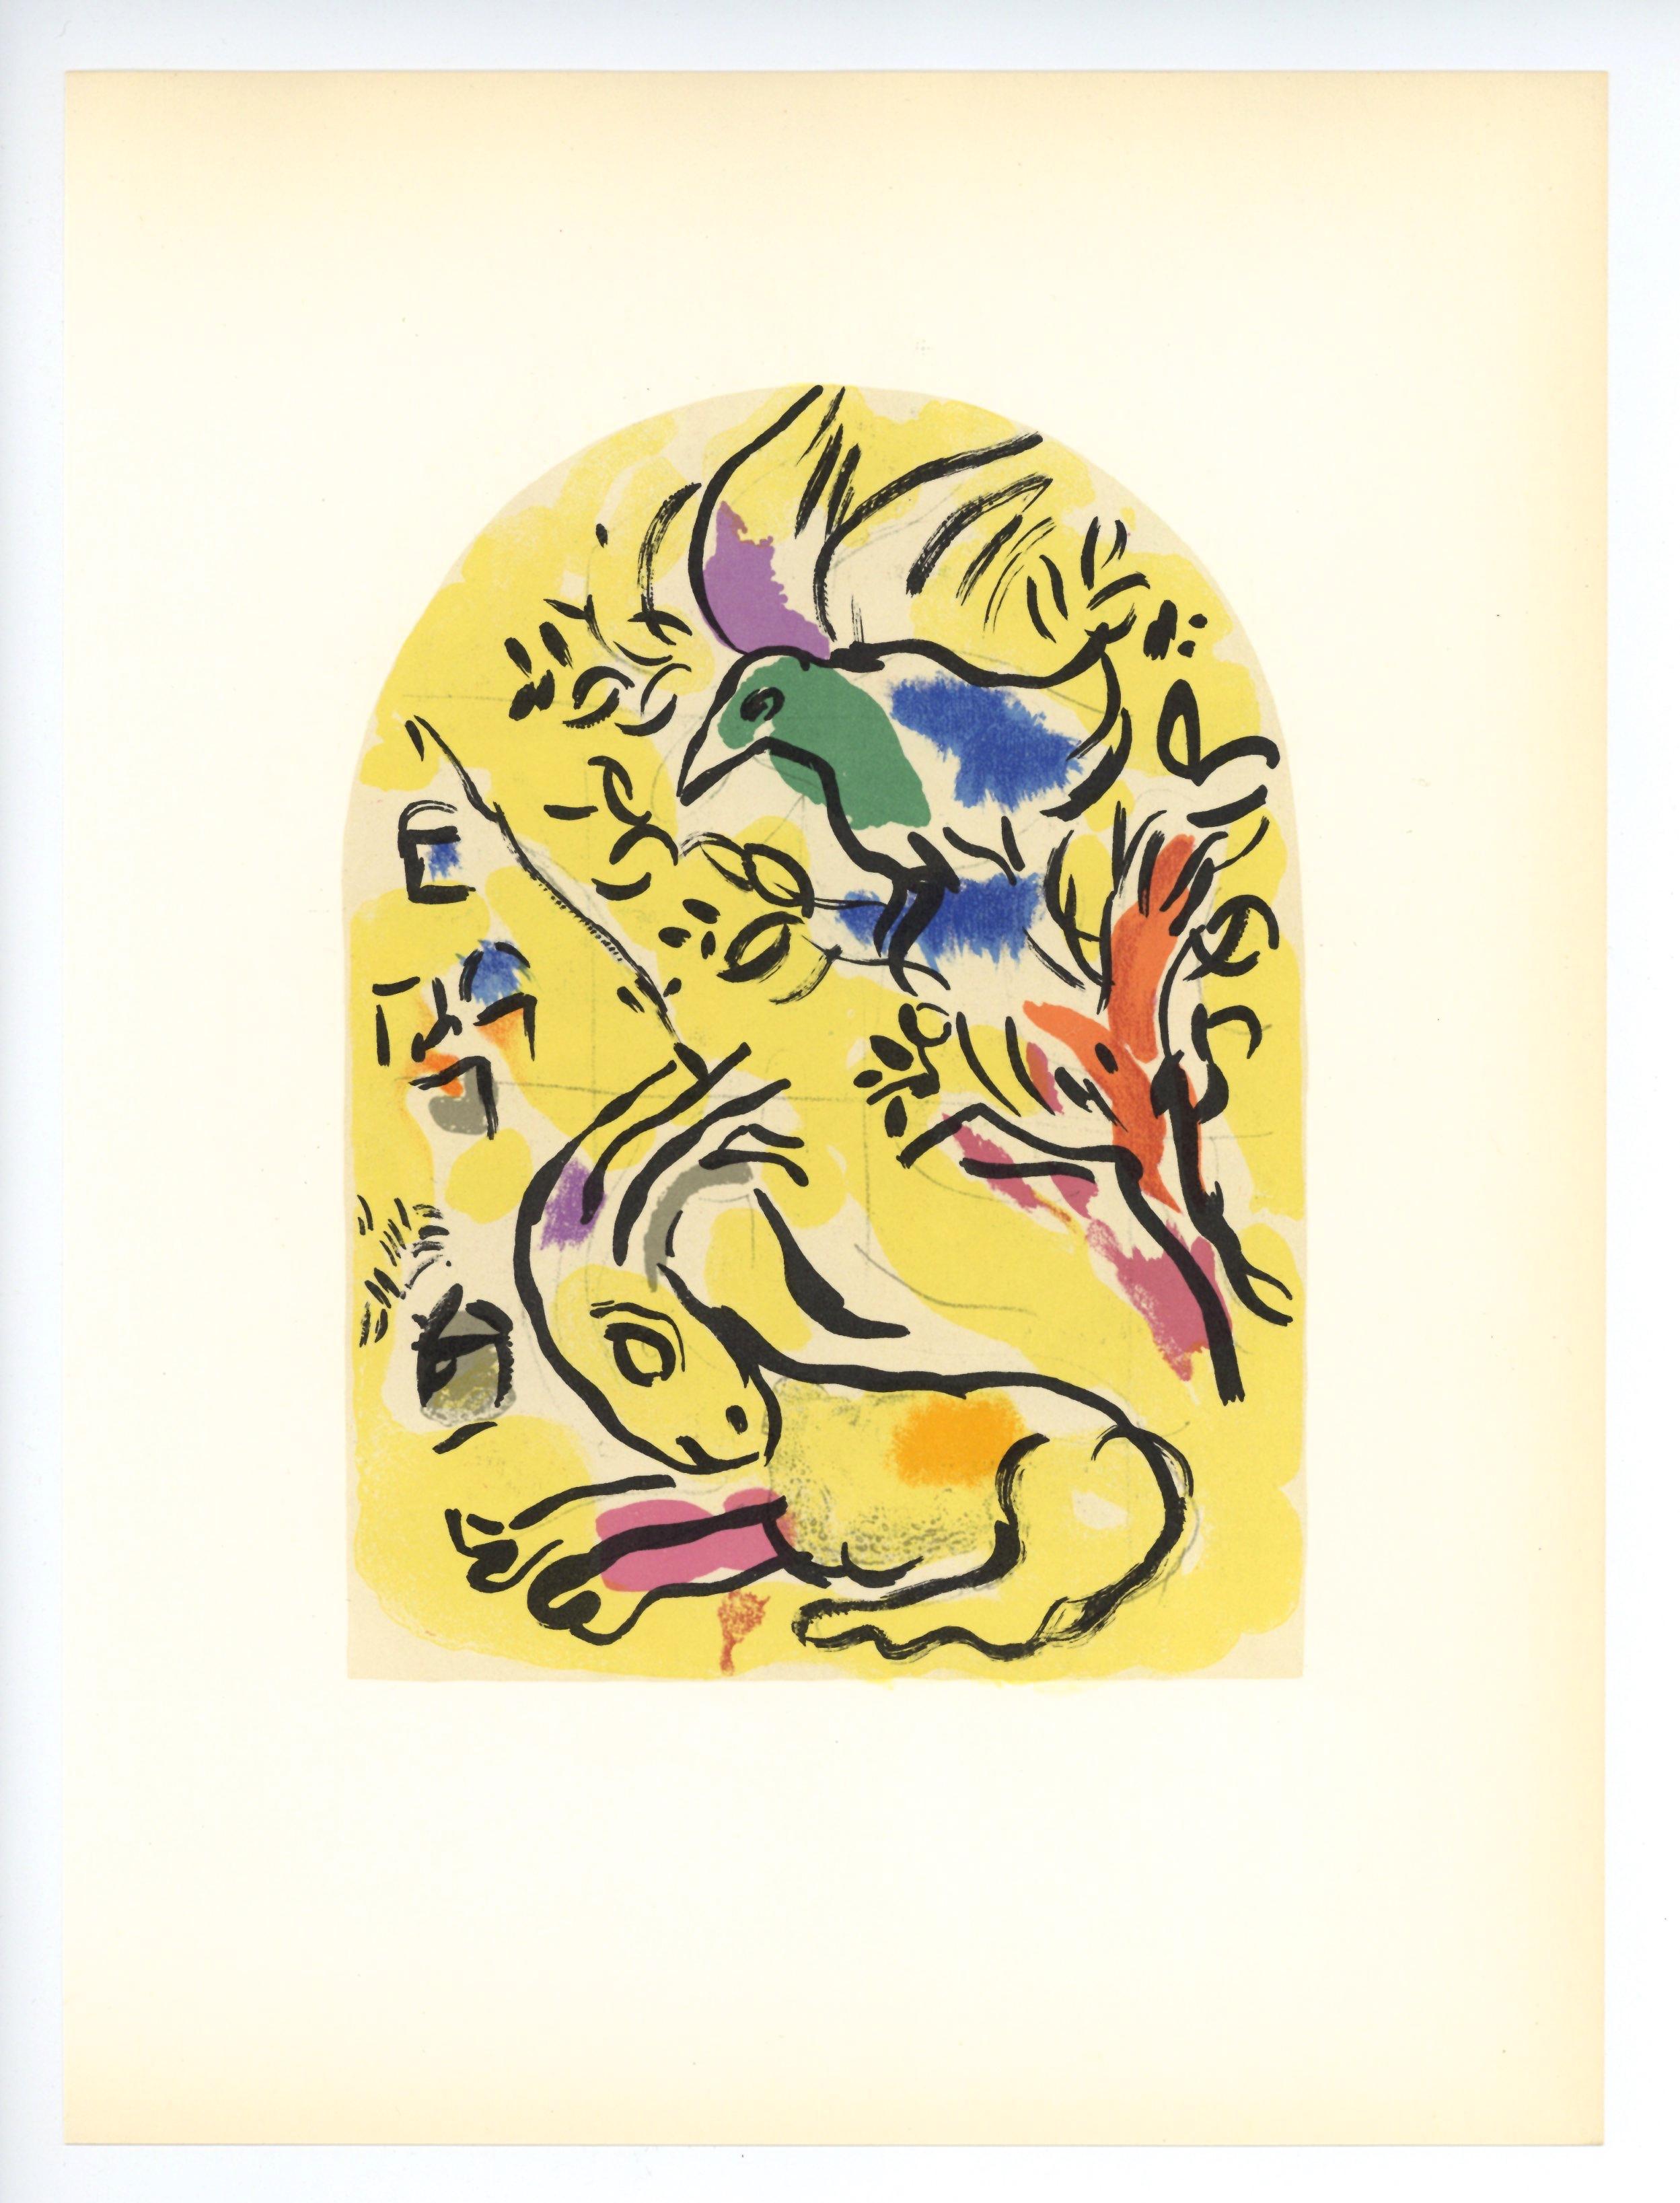 Lithographies des tribus d'Israël - Lot de 12 œuvres - Print de (after) Marc Chagall